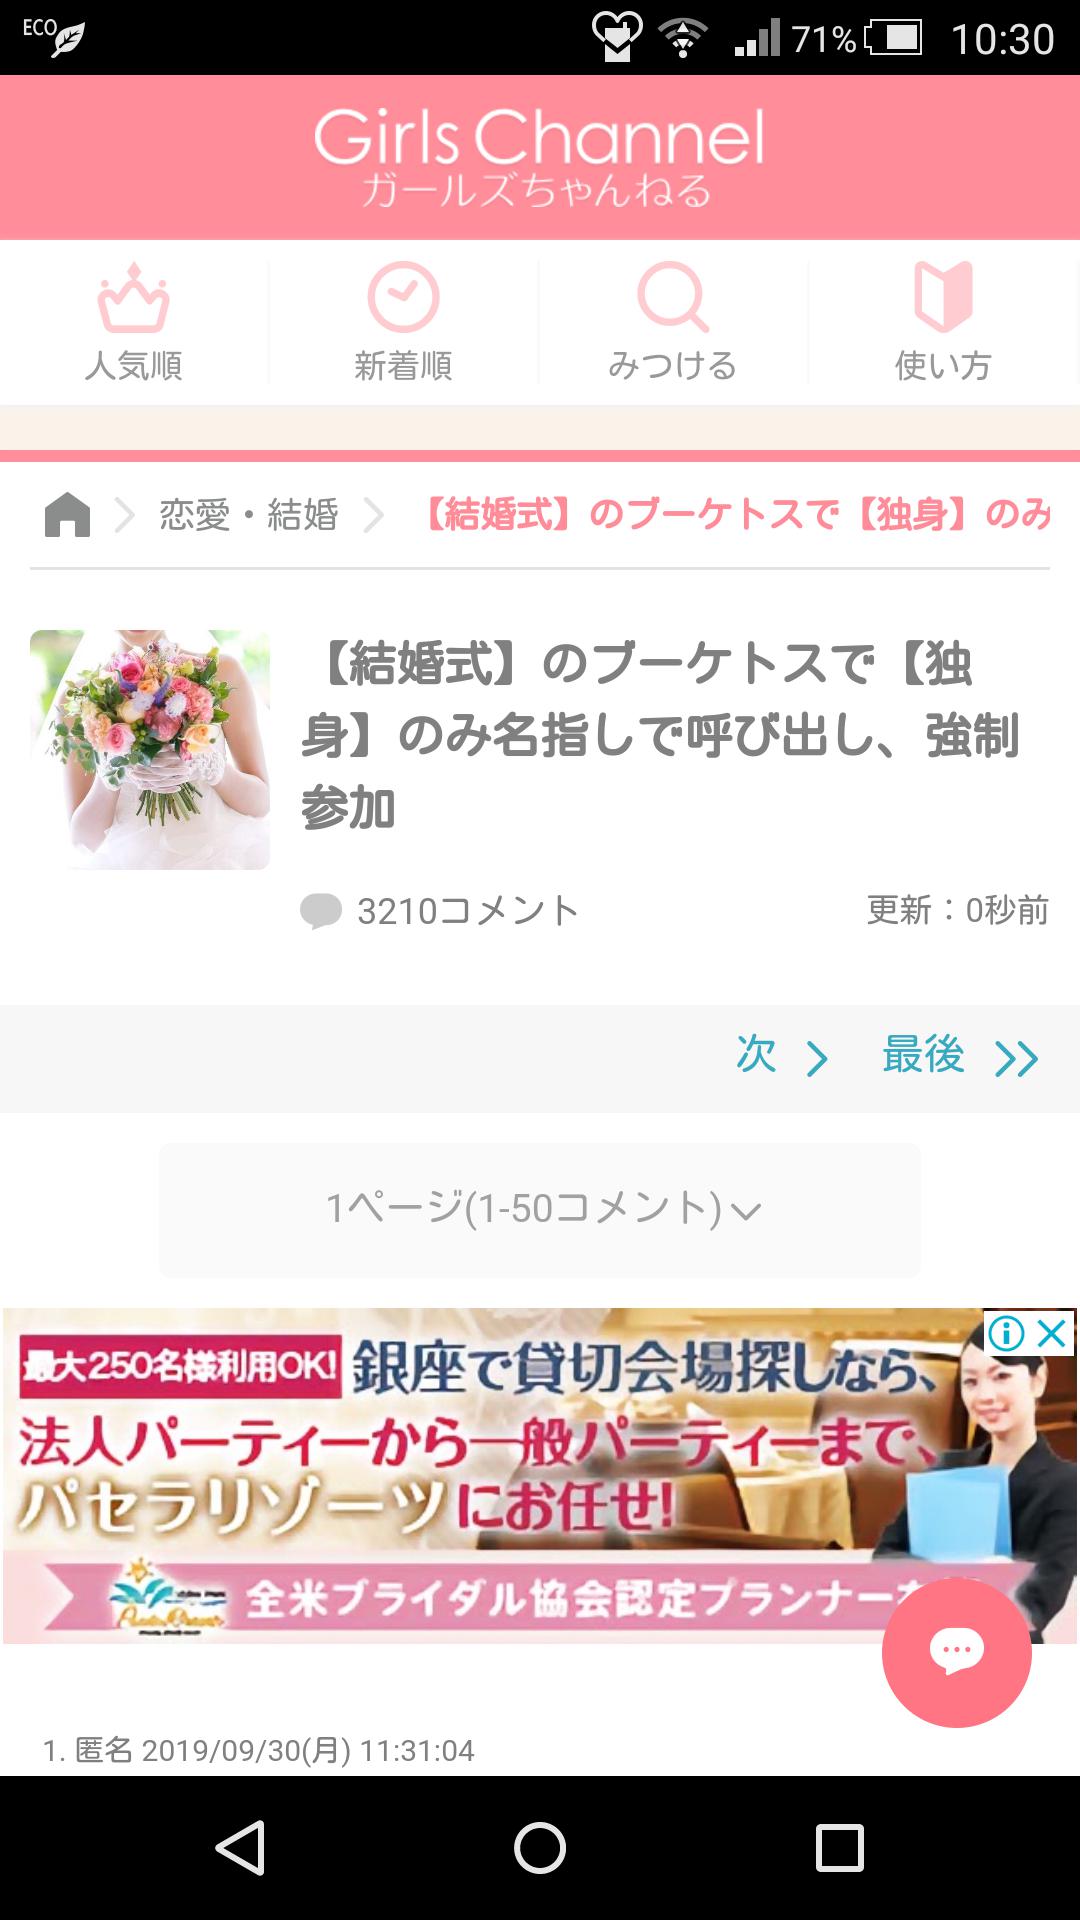 [Sad news] Single women, wedding bouquets cut out